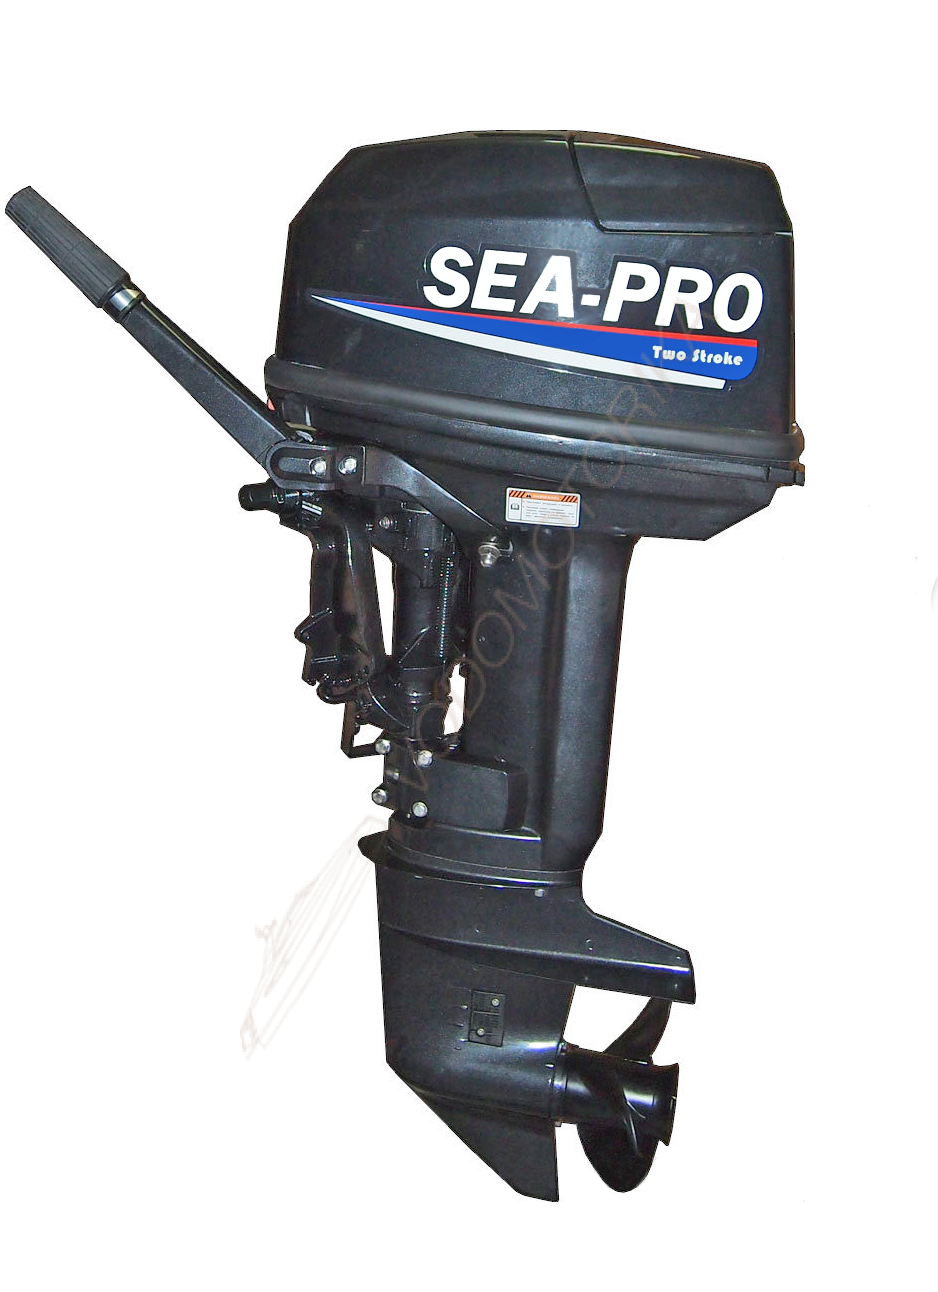  мотор SEA-PRO Т 40 S&E 40 л.с. двухтактный -   .